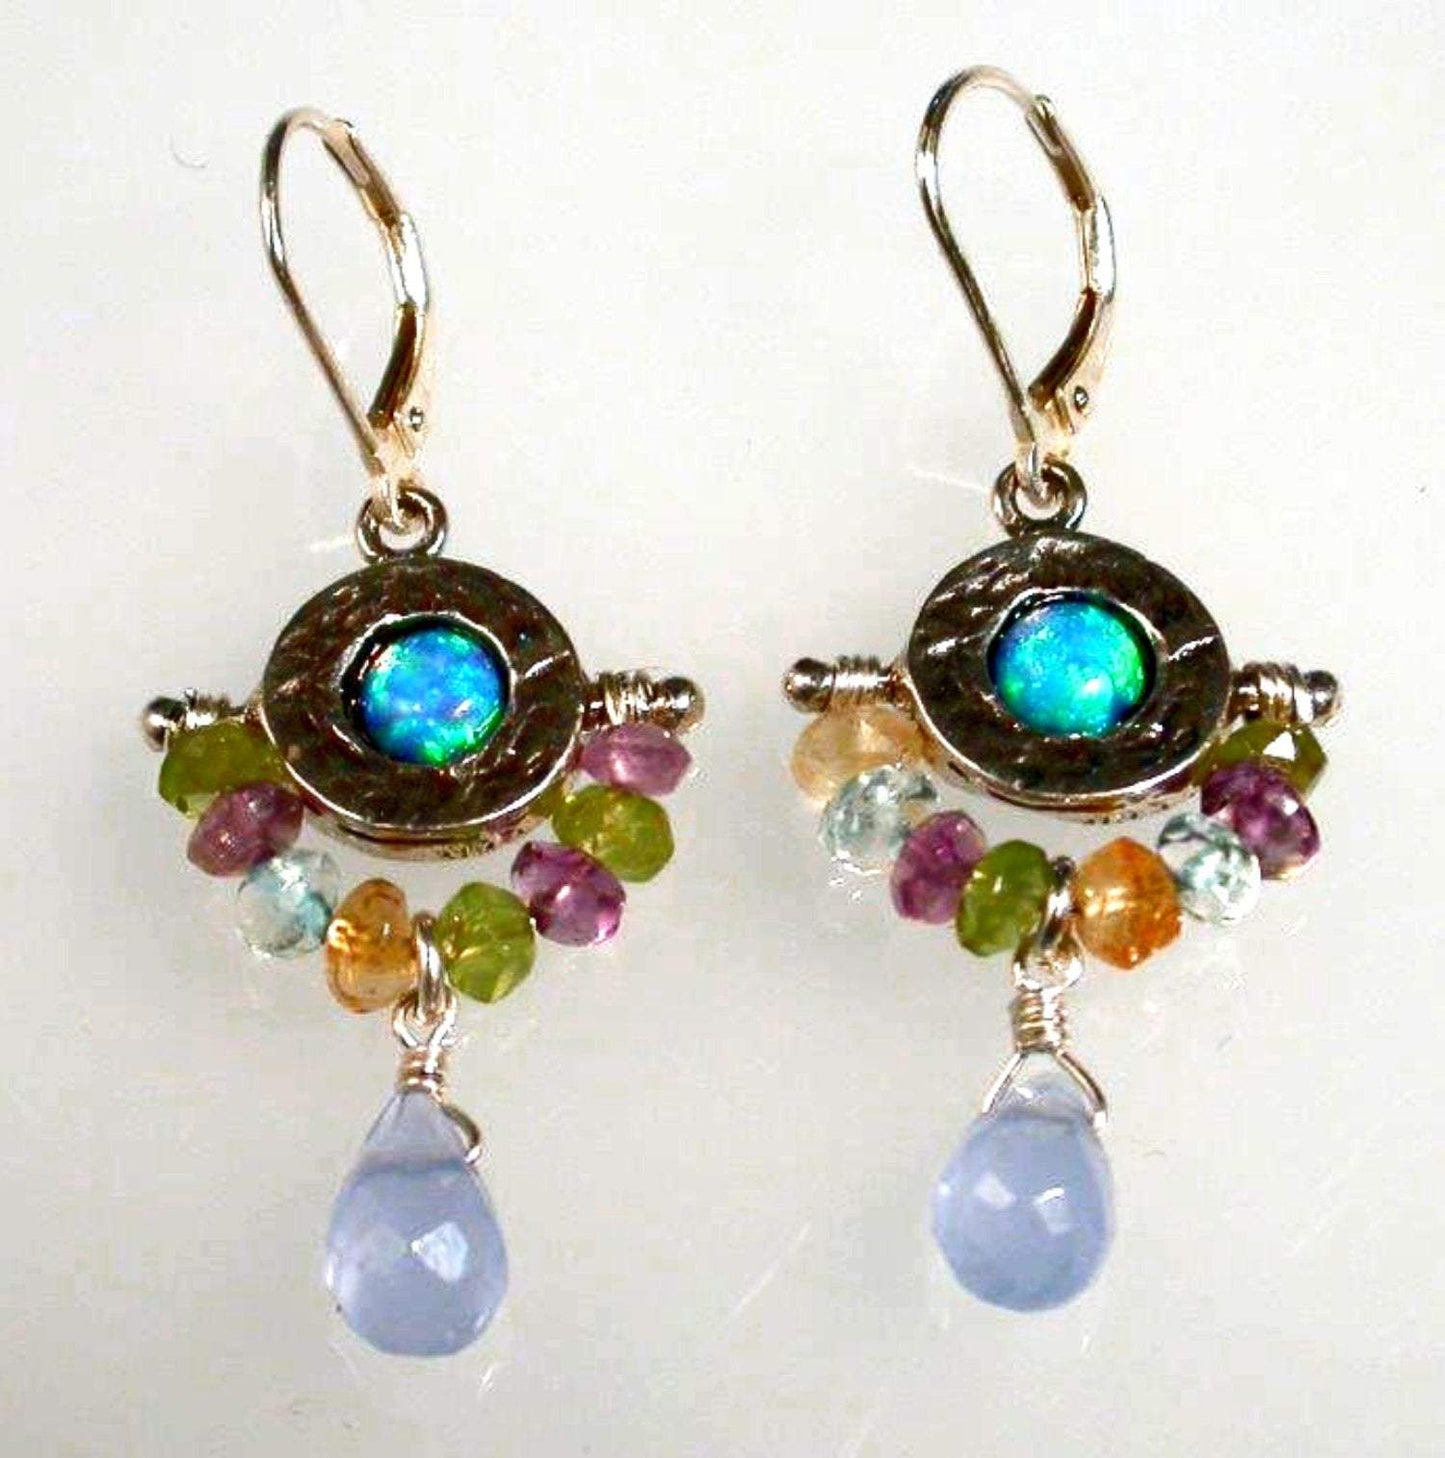 Bluenoemi Jewelry earrings for woman blue opal gemstones earrings/ orecchini argento / gemstones boho chic jewelry/ israelische schmuck/ Valentine gift